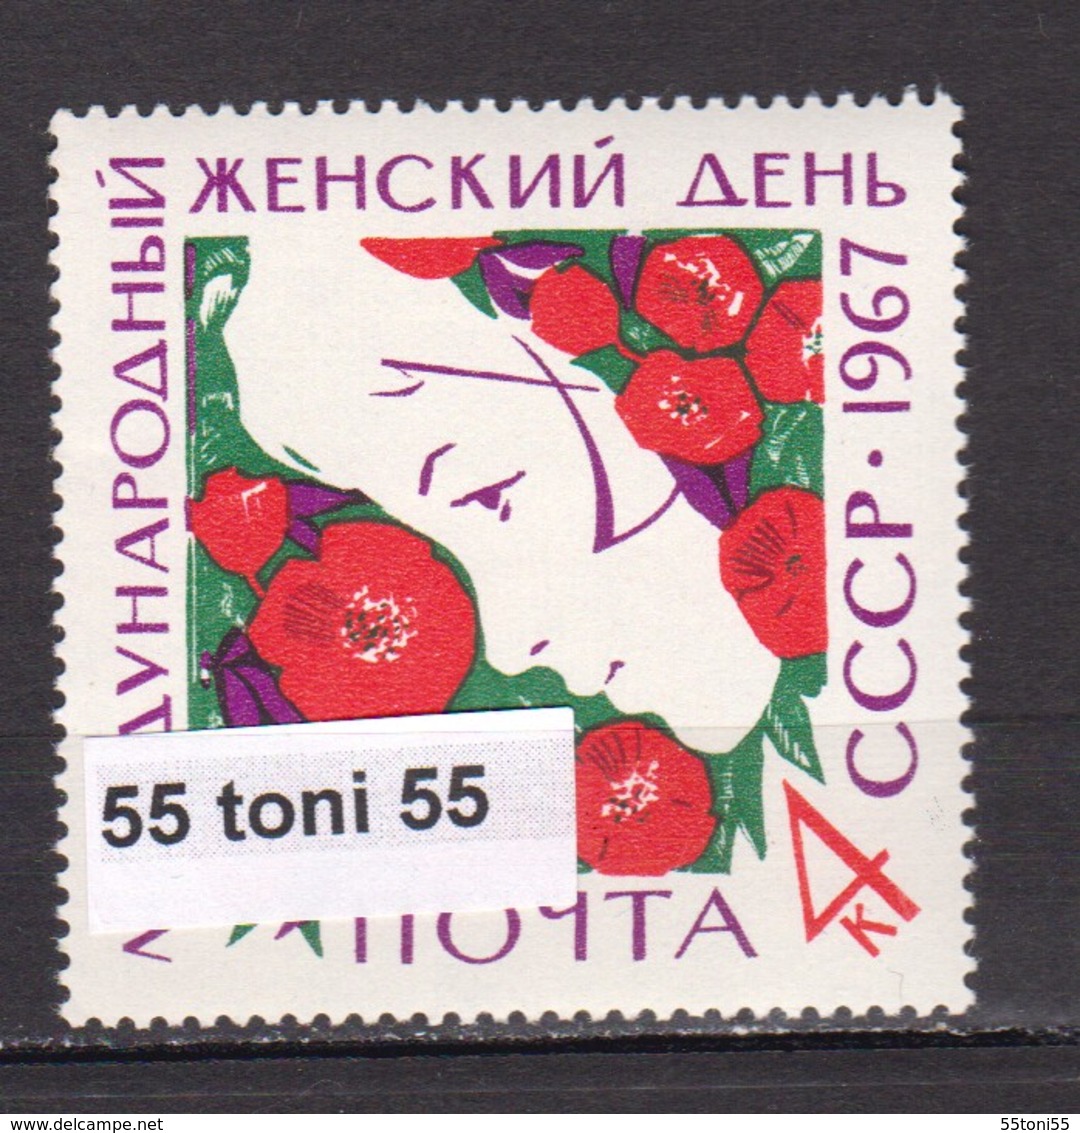 1967 International Women's Day, Mi 3324 1v.-MNH   USSR - Muttertag